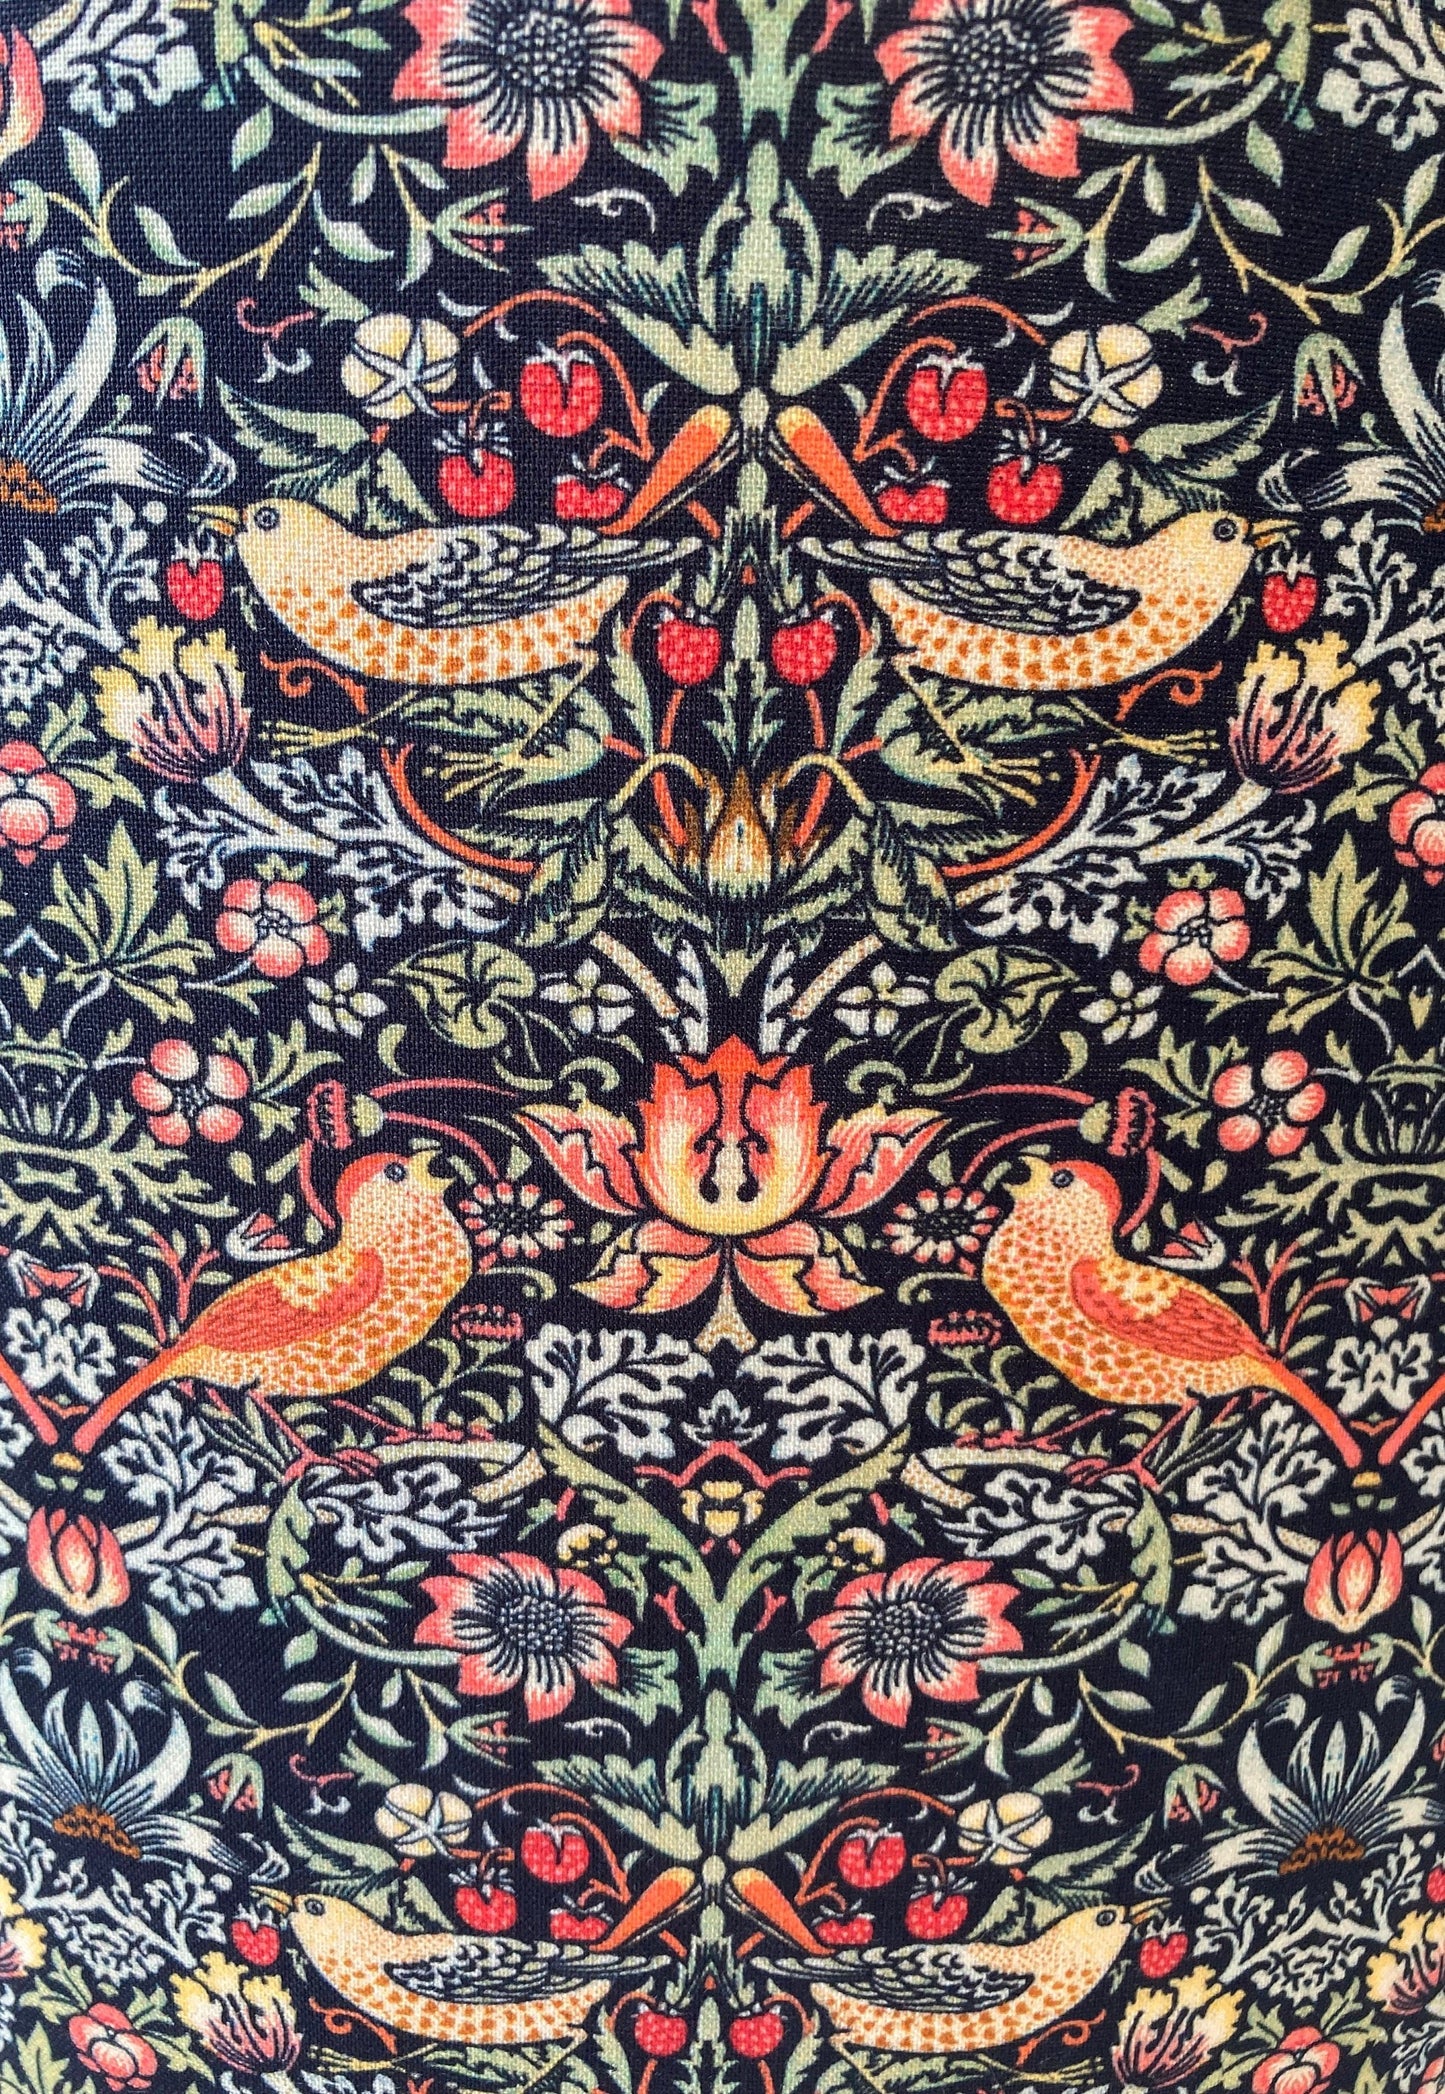 William Morris Black Strawberry Thief Fabric Lampshade, Drum Lampshade, Floral Bird Fabric Lampshade